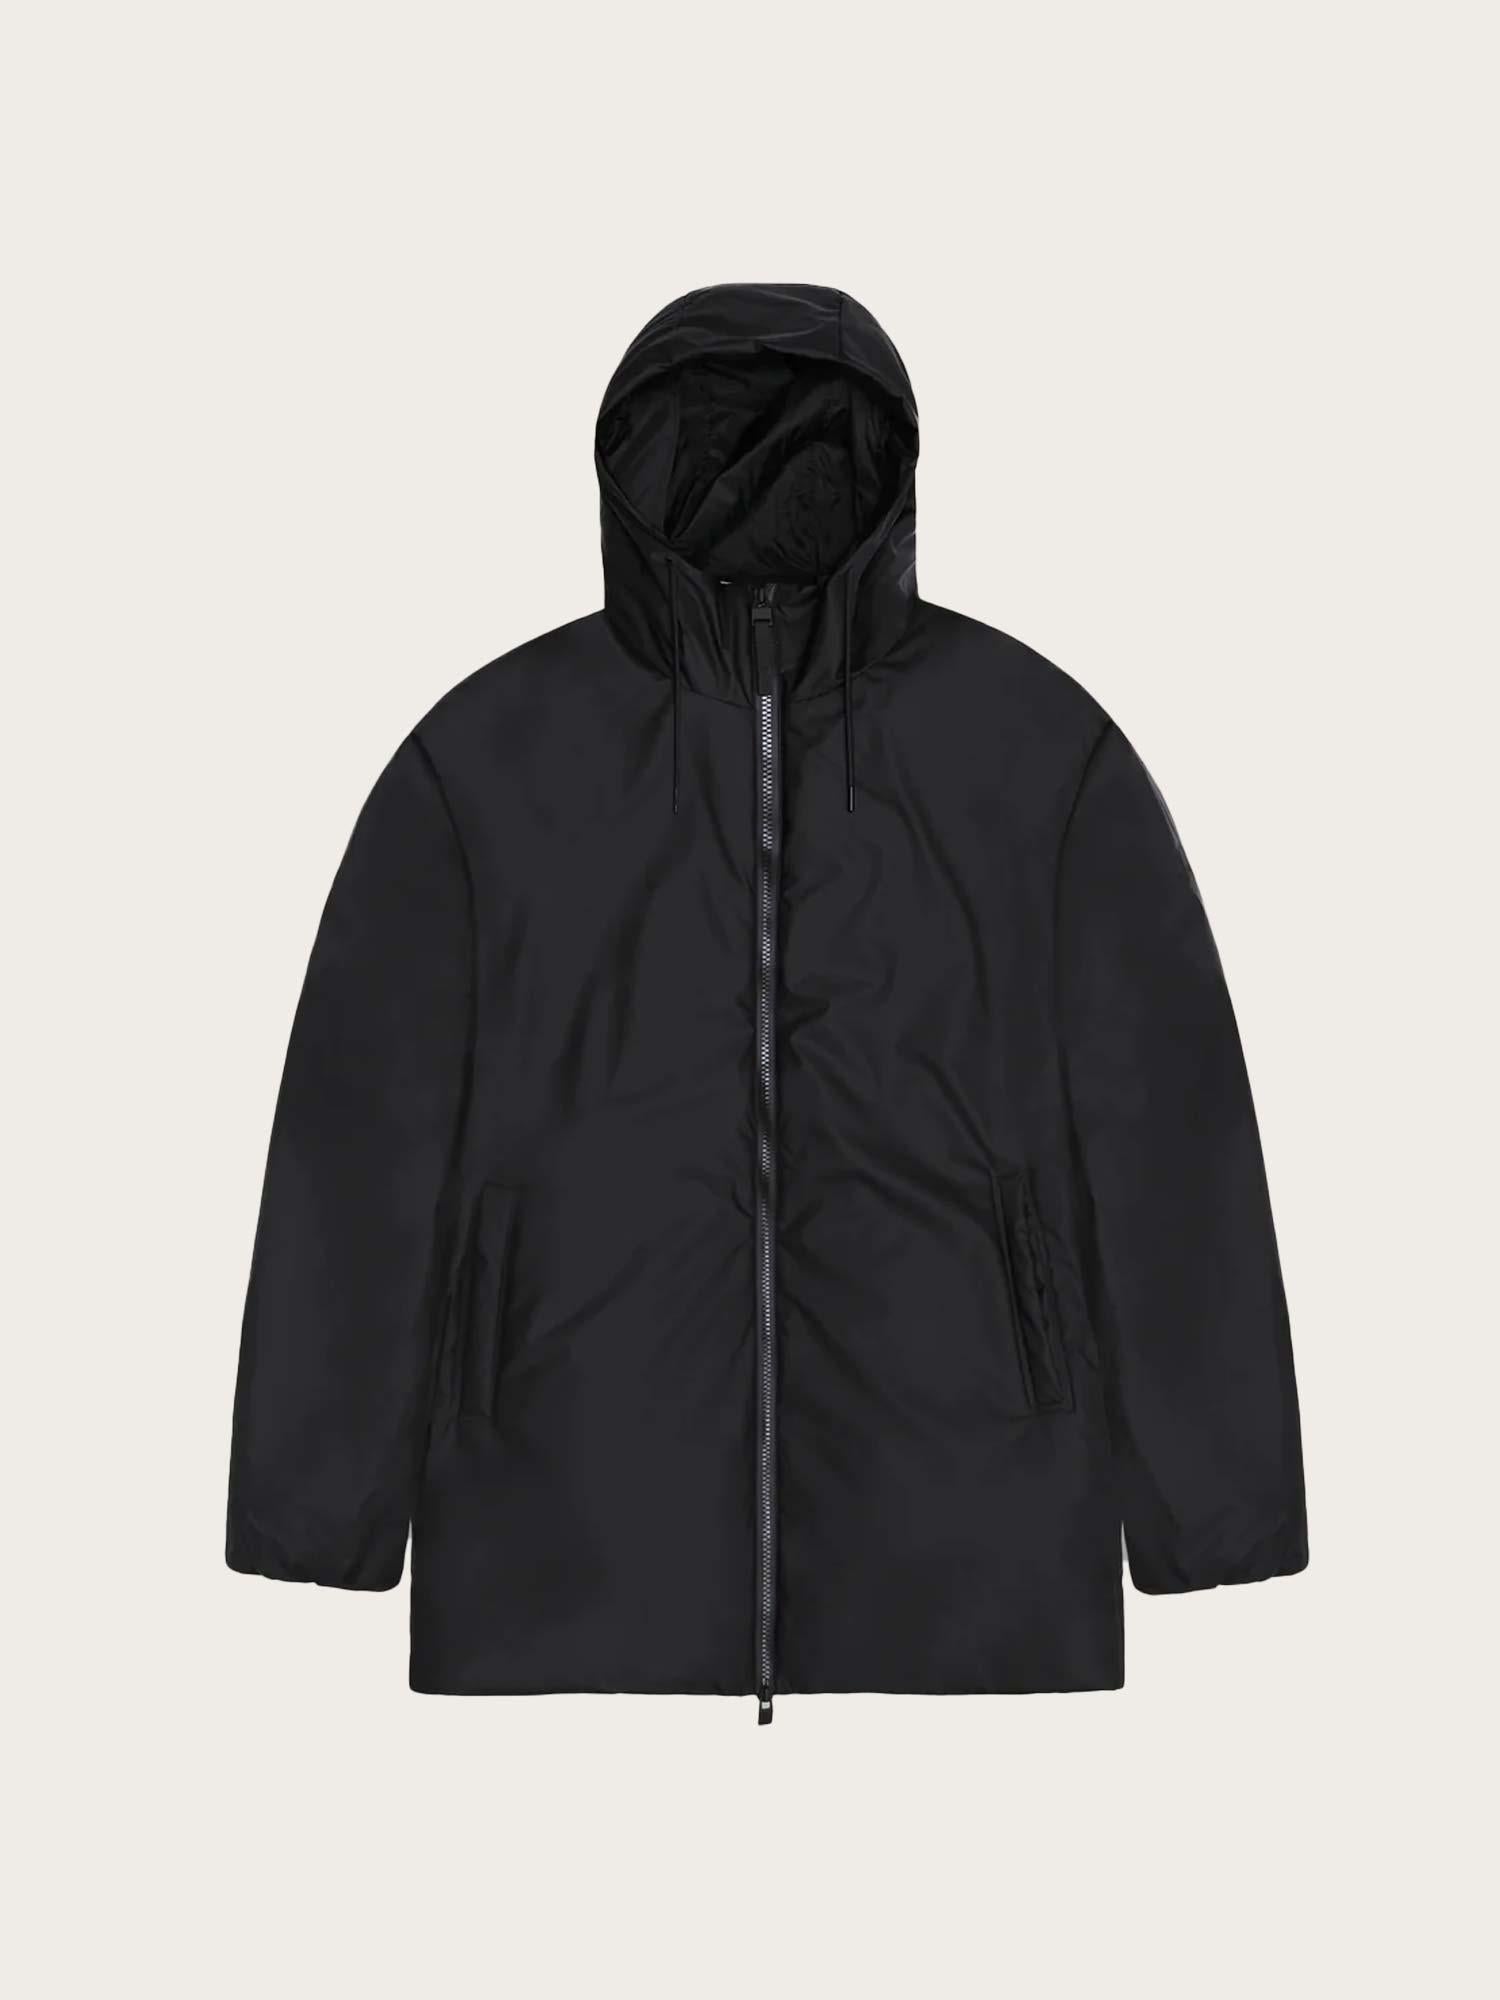 Lohja Long Insulated Jacket W3T2 - Black